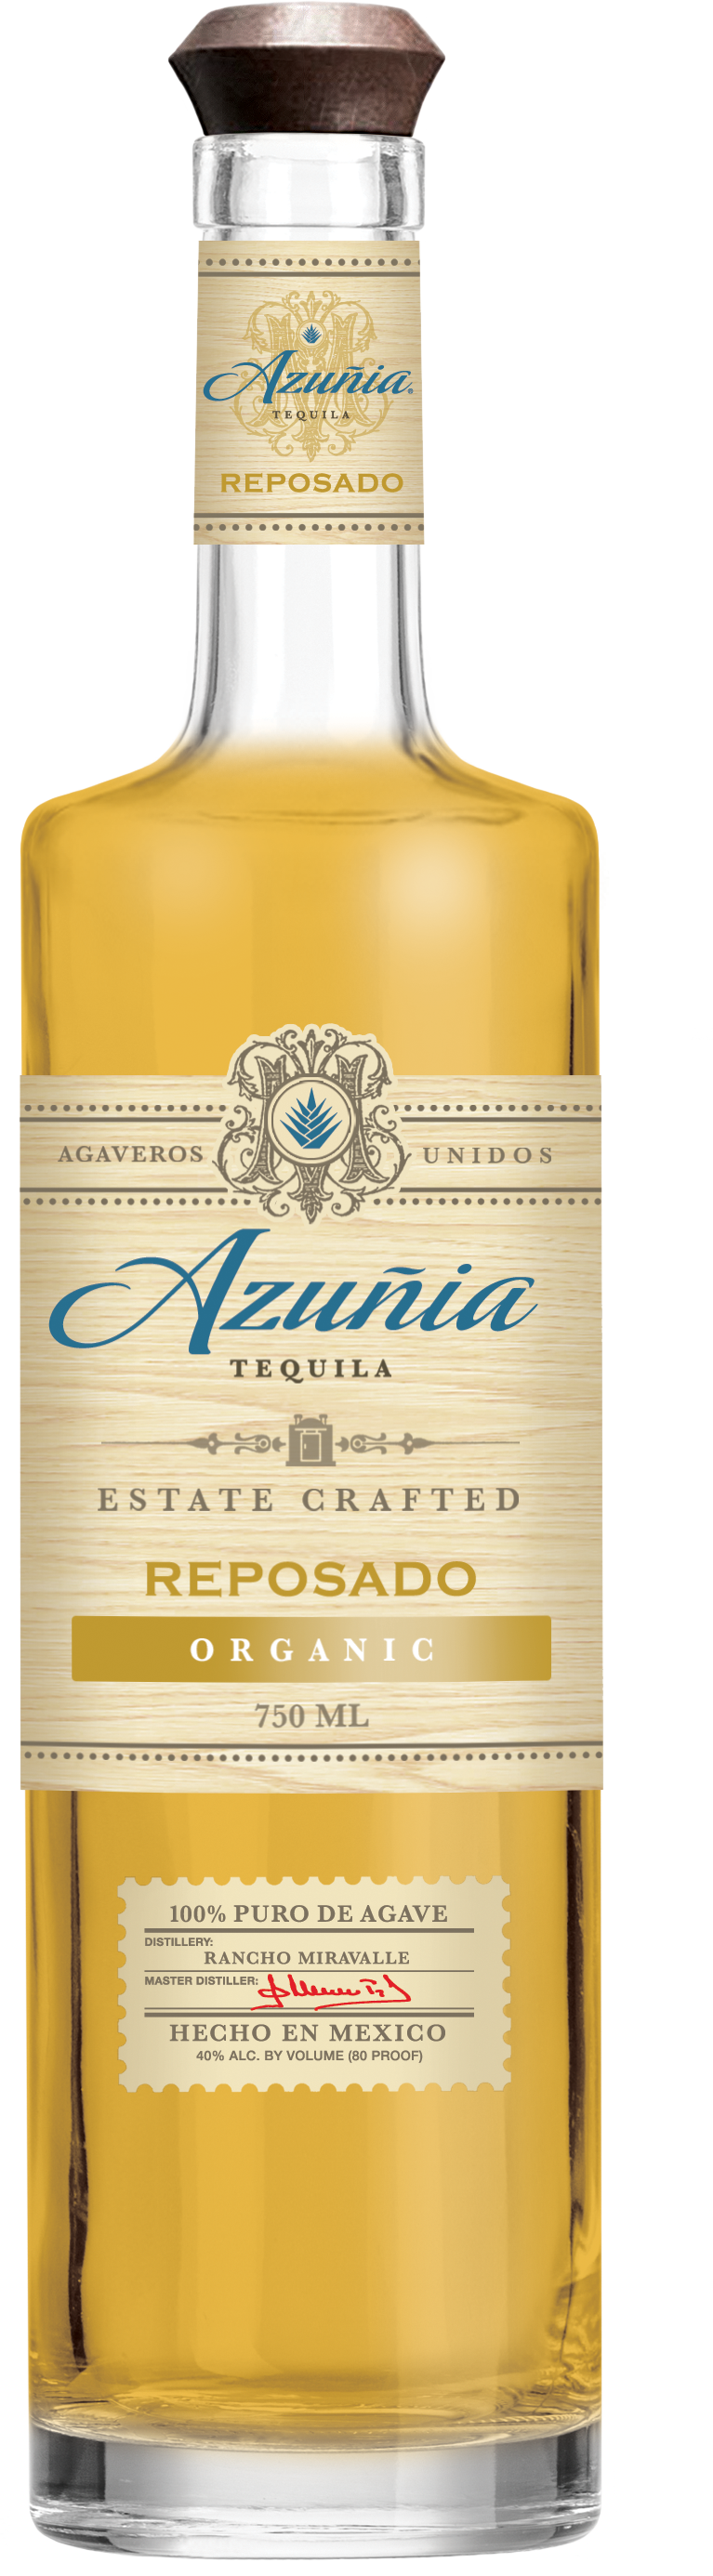 Reposado Tequila (Organic) Photo